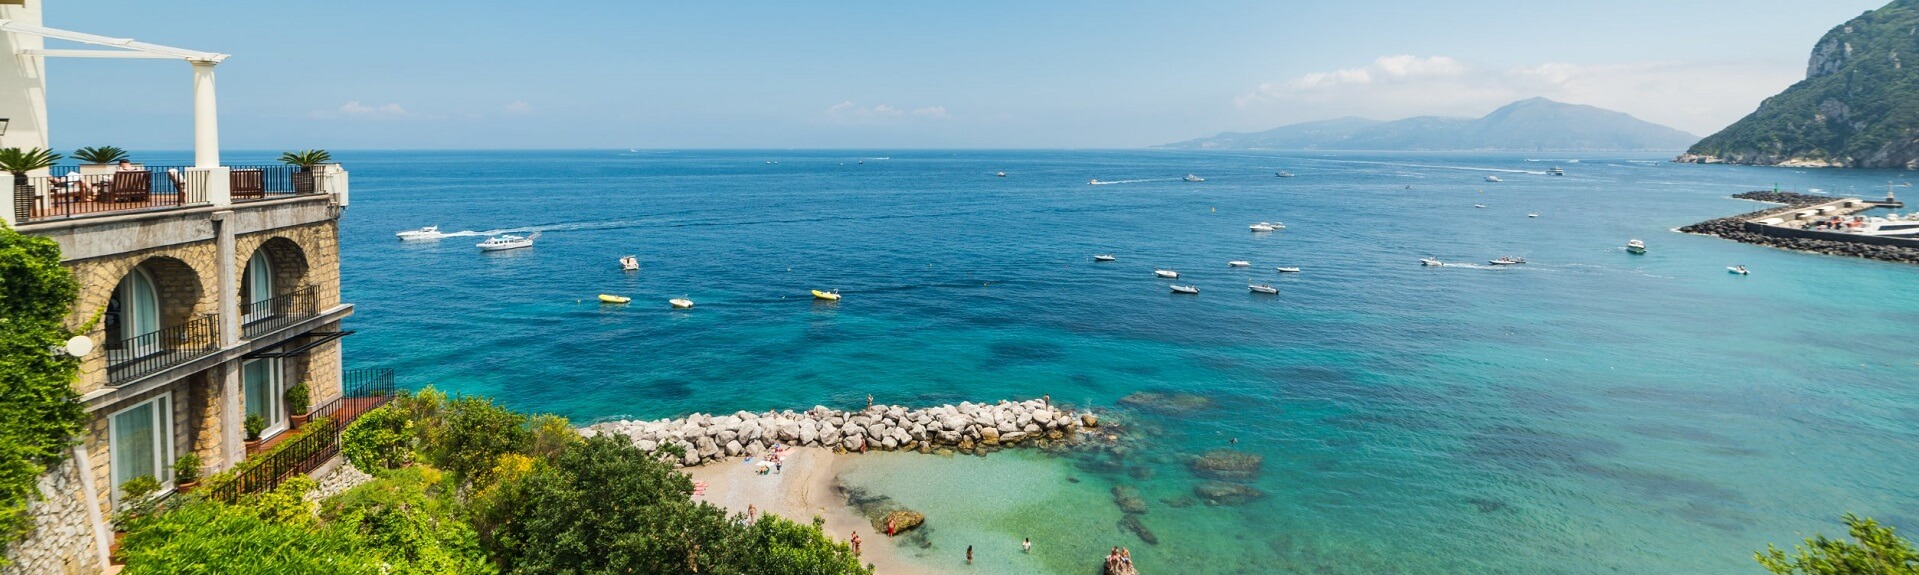 How do you get to the Isle of Capri?